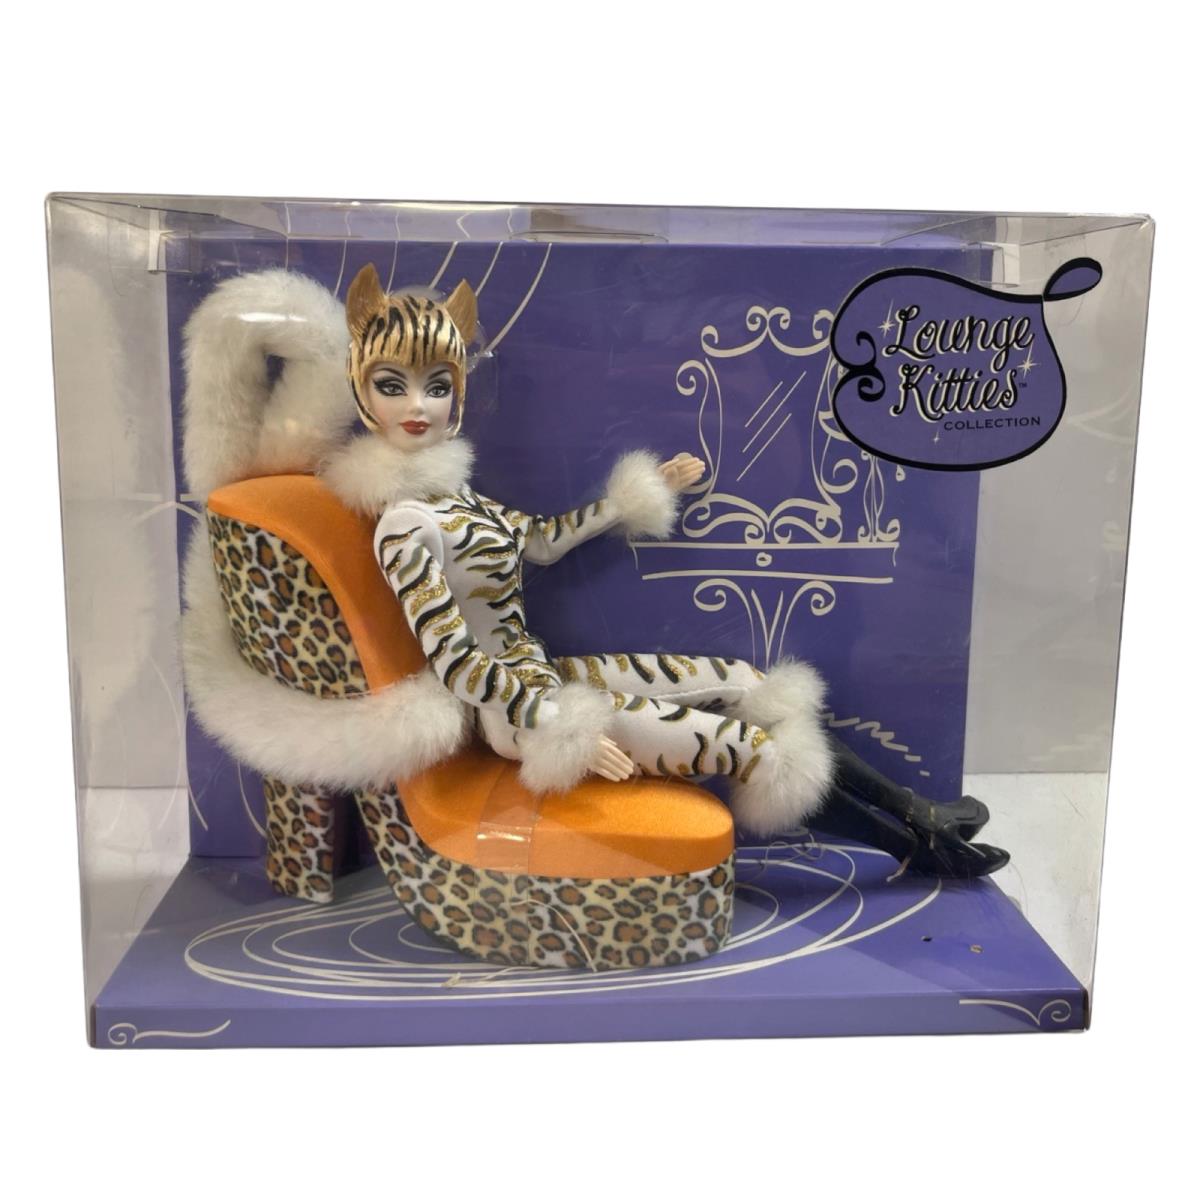 Barbie Lounge Kitties Collection 1 White Tiger Doll 2003 Mattel C2478 Nrfb